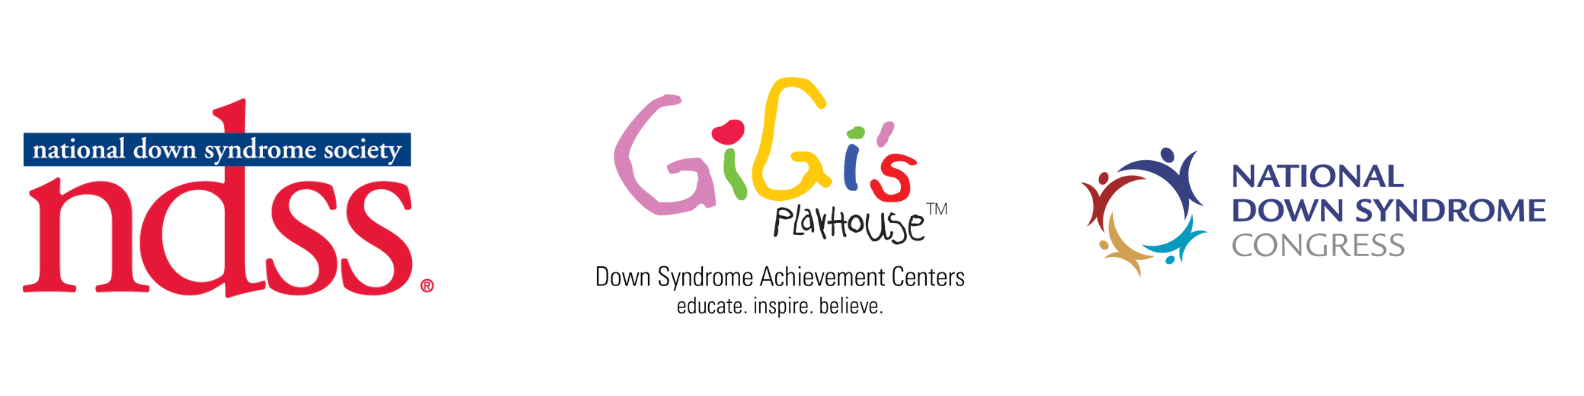 NDSS, GiGi's Playhouse, NDSC logos